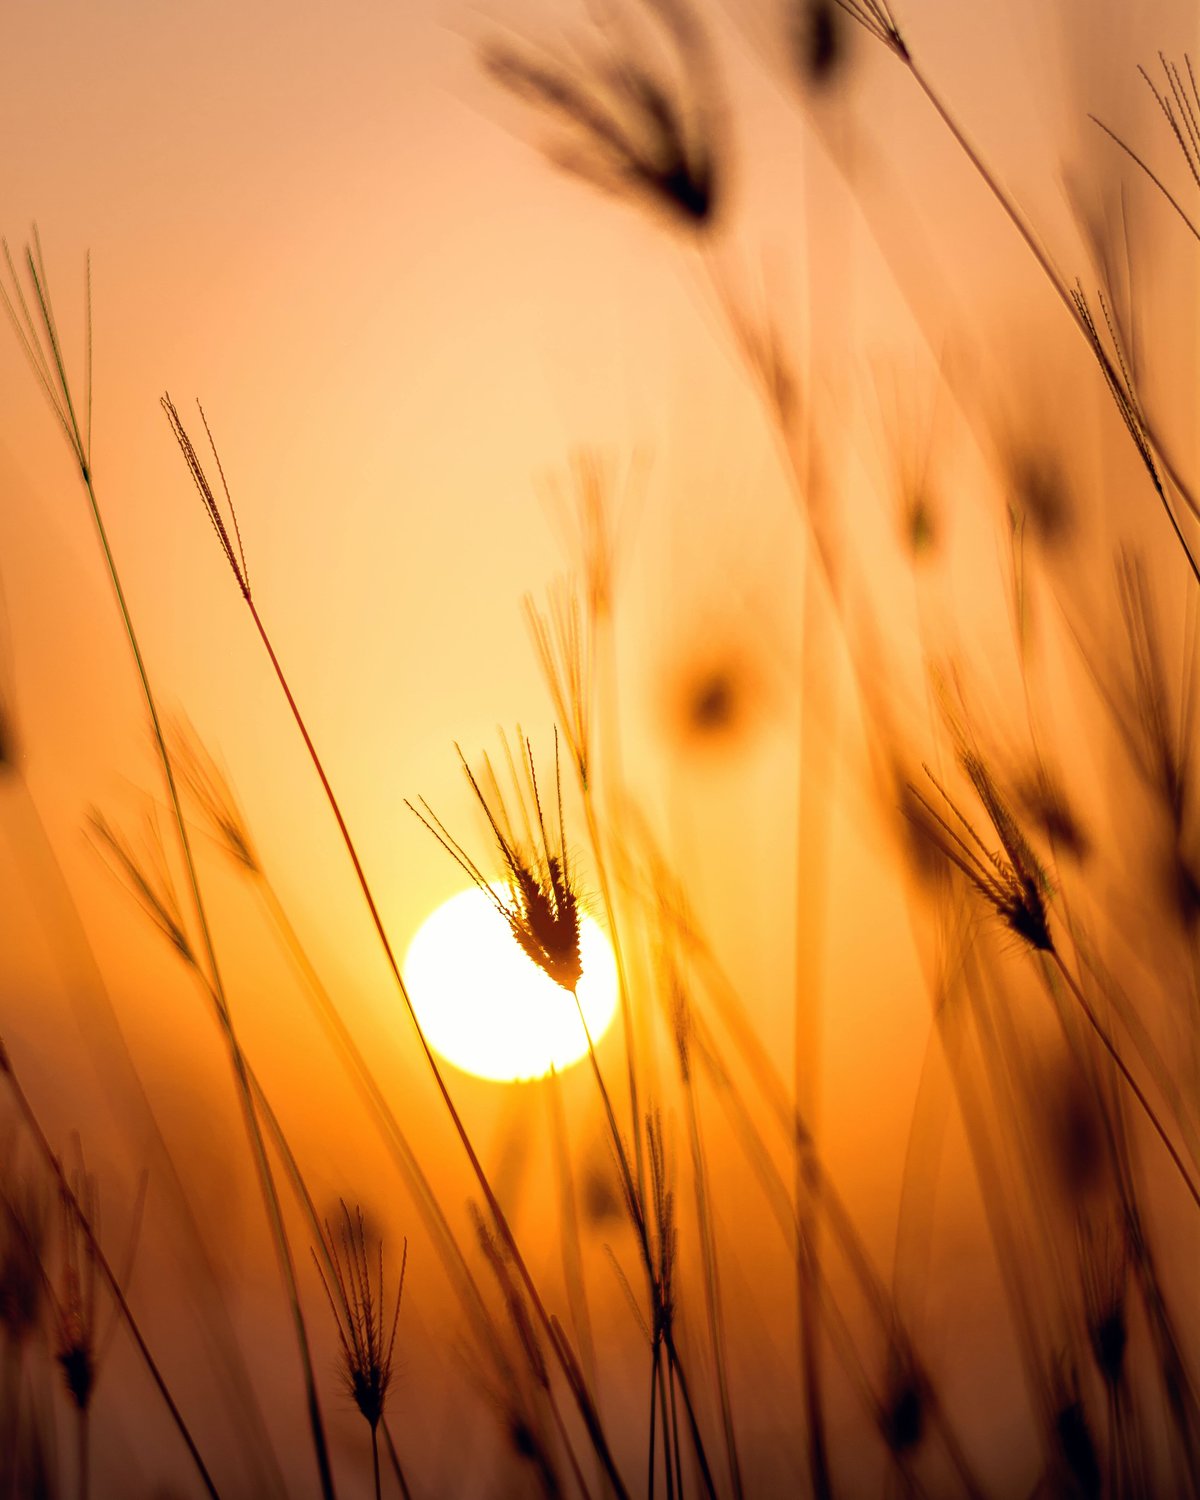 A setting sun in an orange sky viewed through blurry wheat stalks